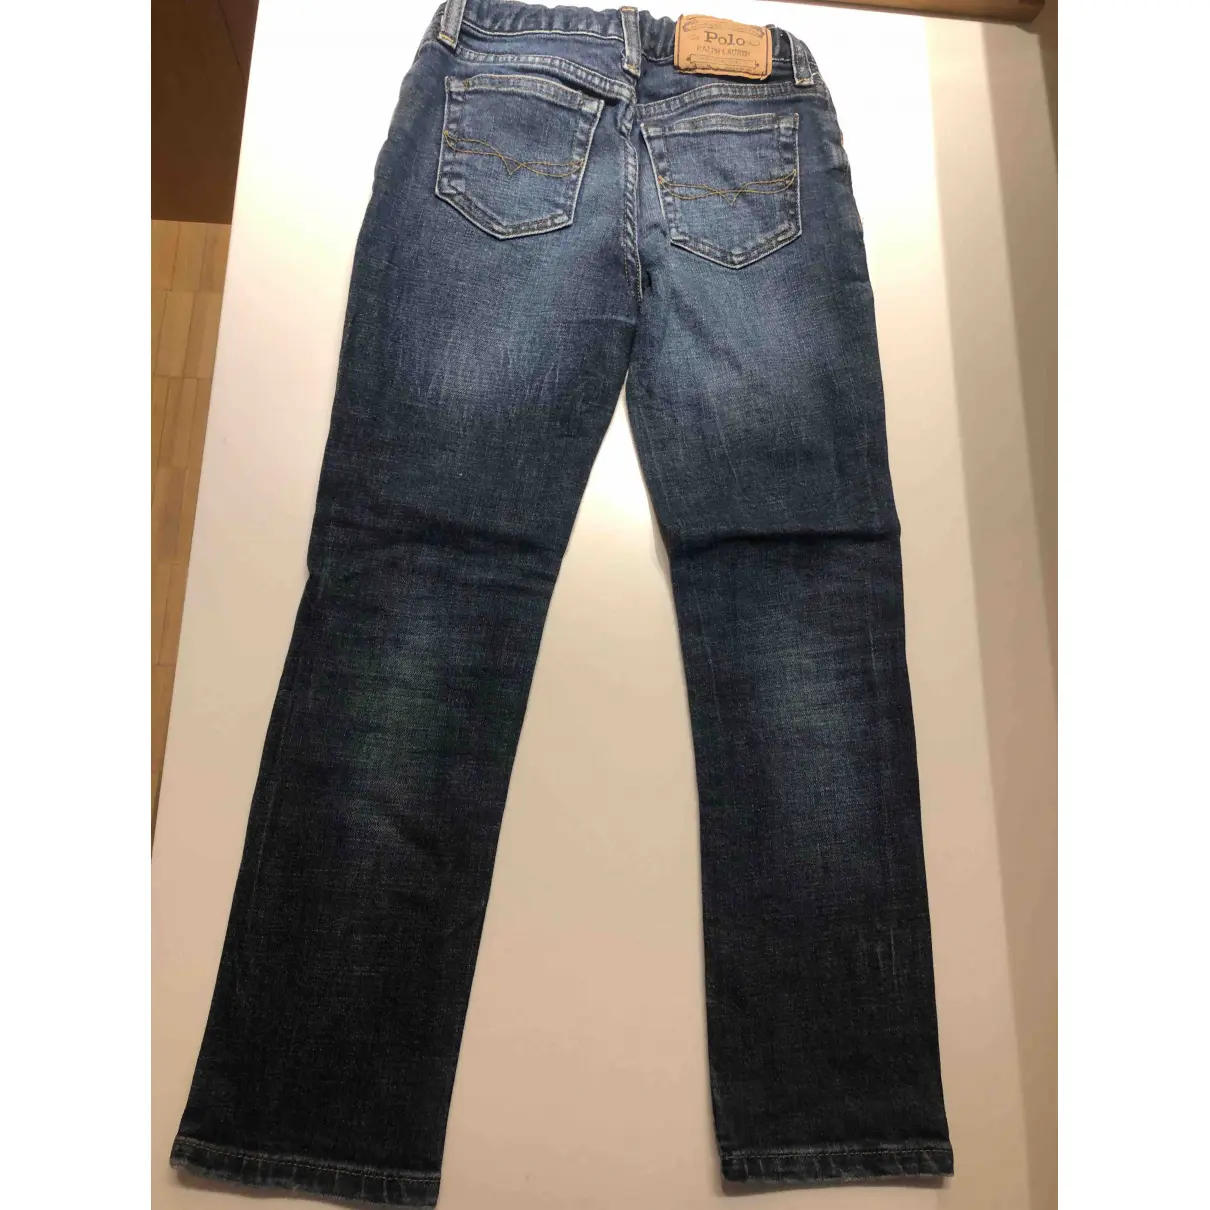 Buy Polo Ralph Lauren Blue Denim - Jeans Trousers online